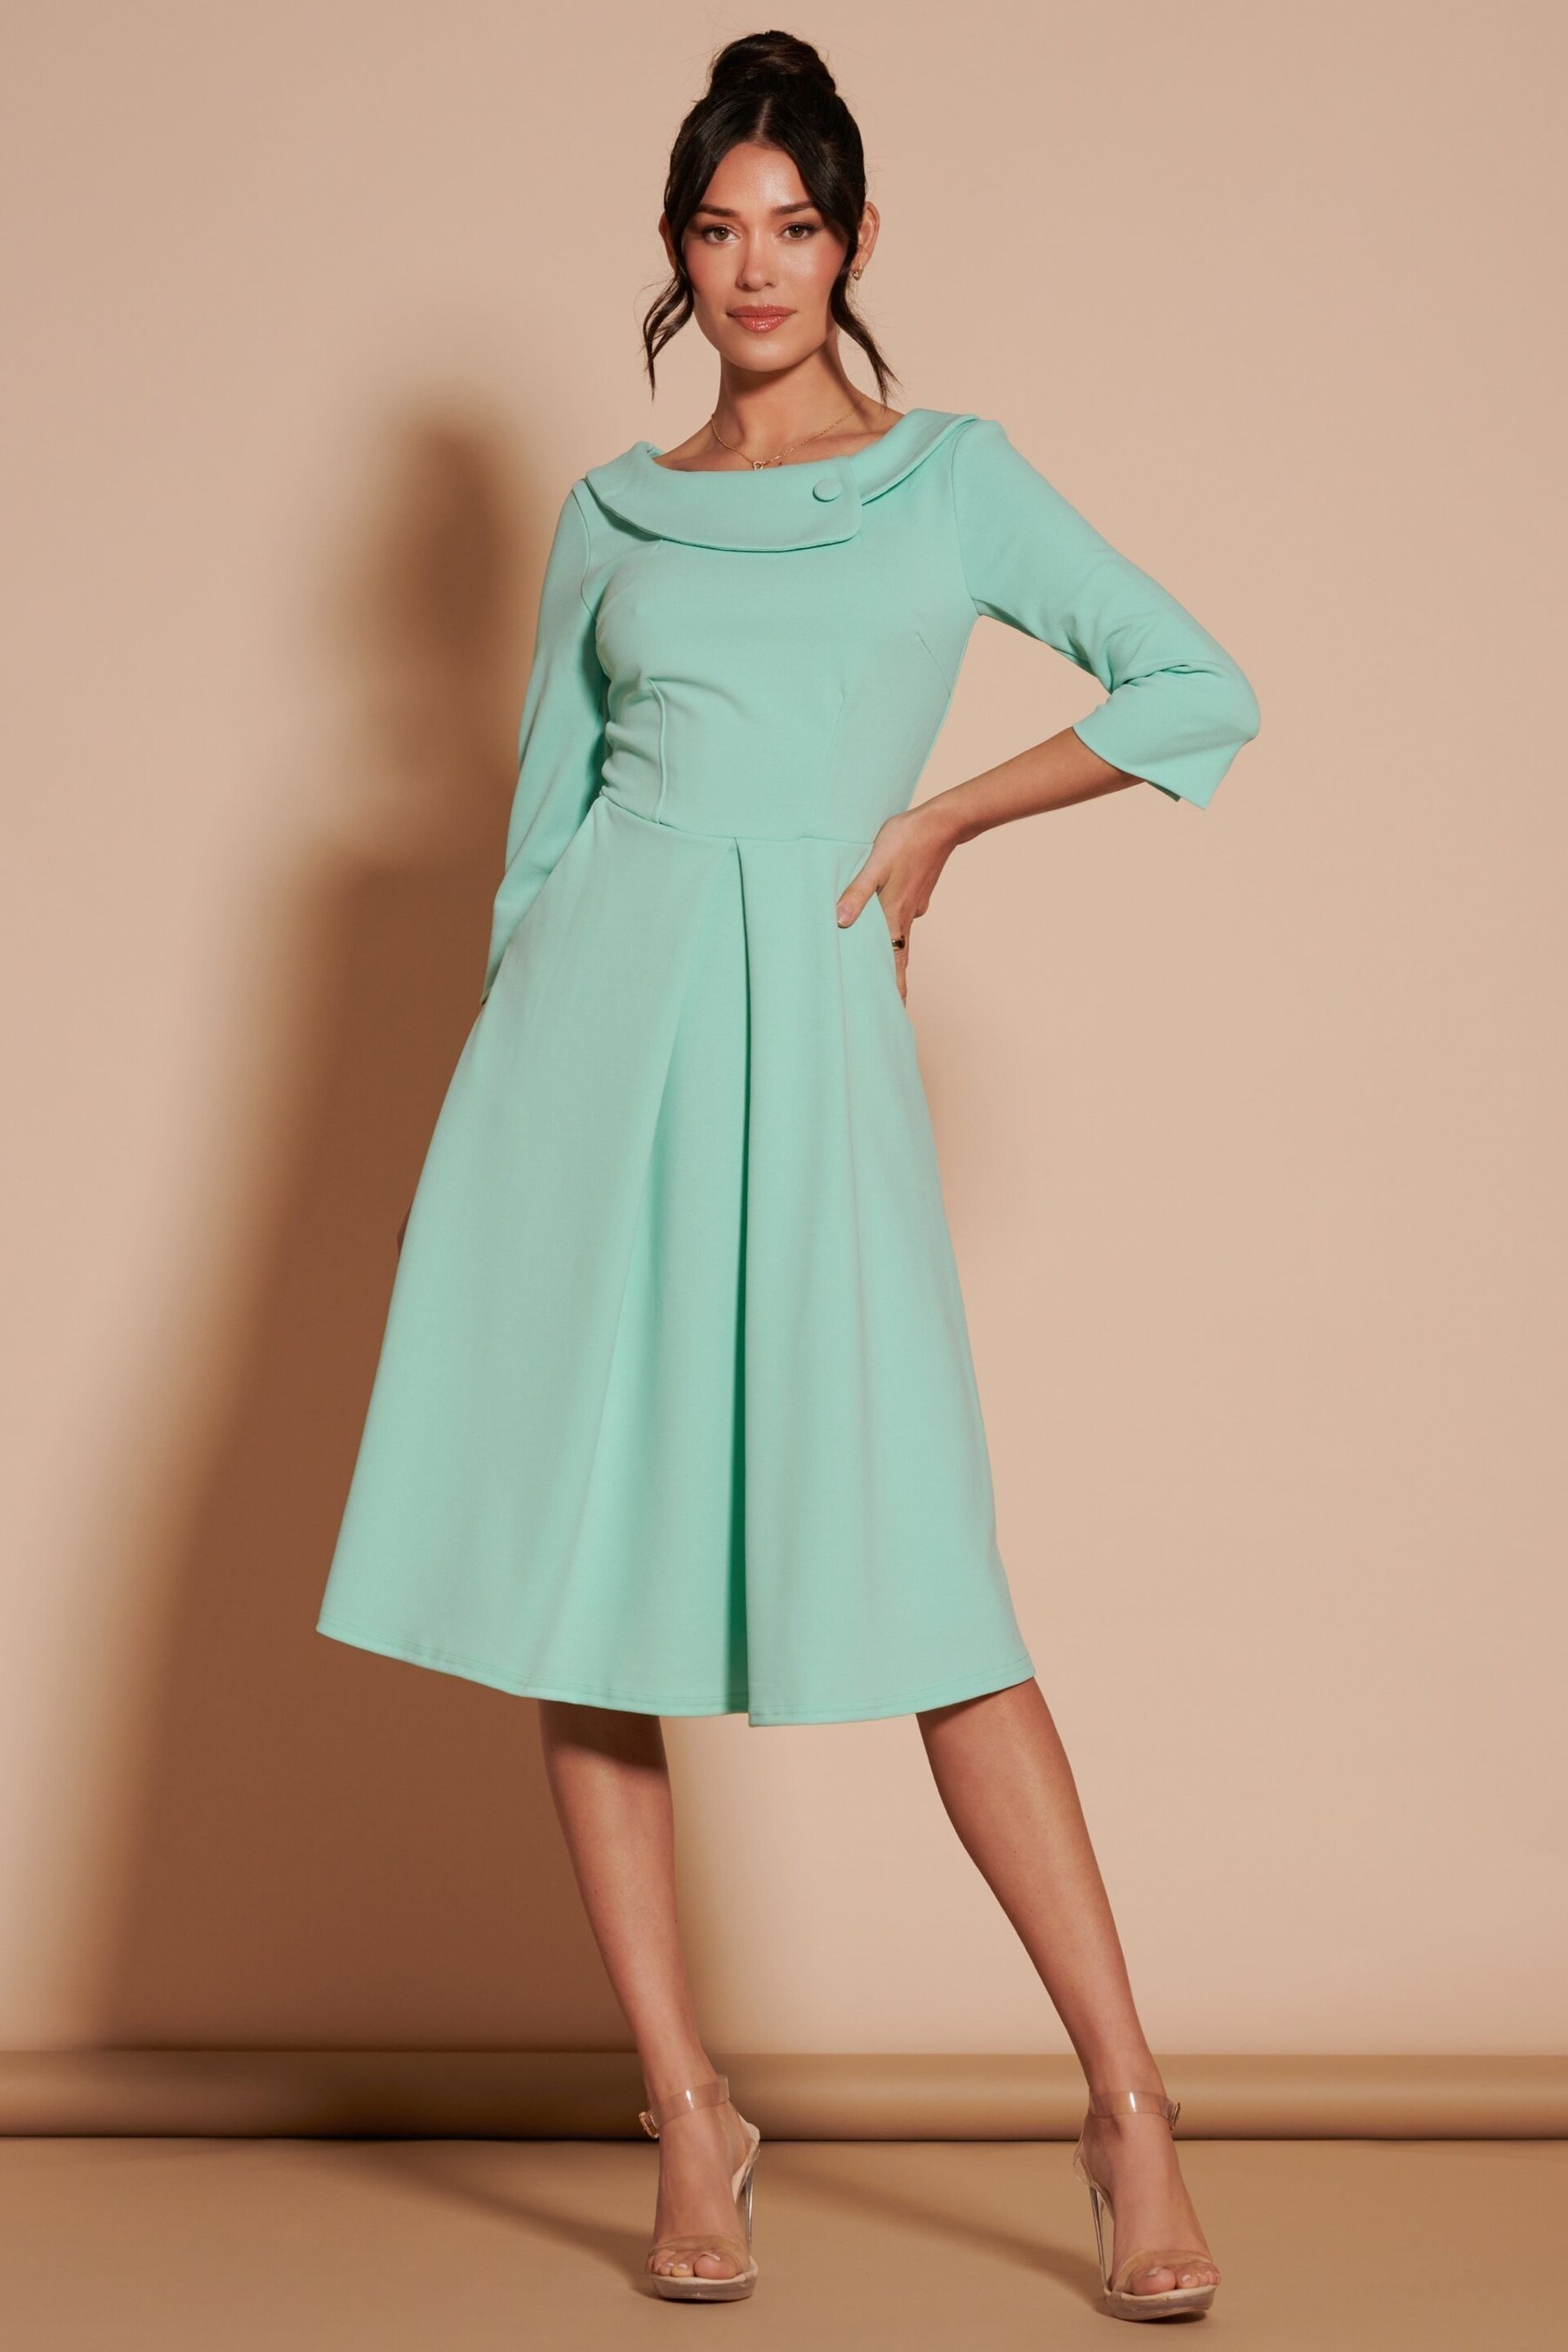 Jolie Moi Green 3/4 Sleeve Fold Neck Midi Dress - Image 1 of 6